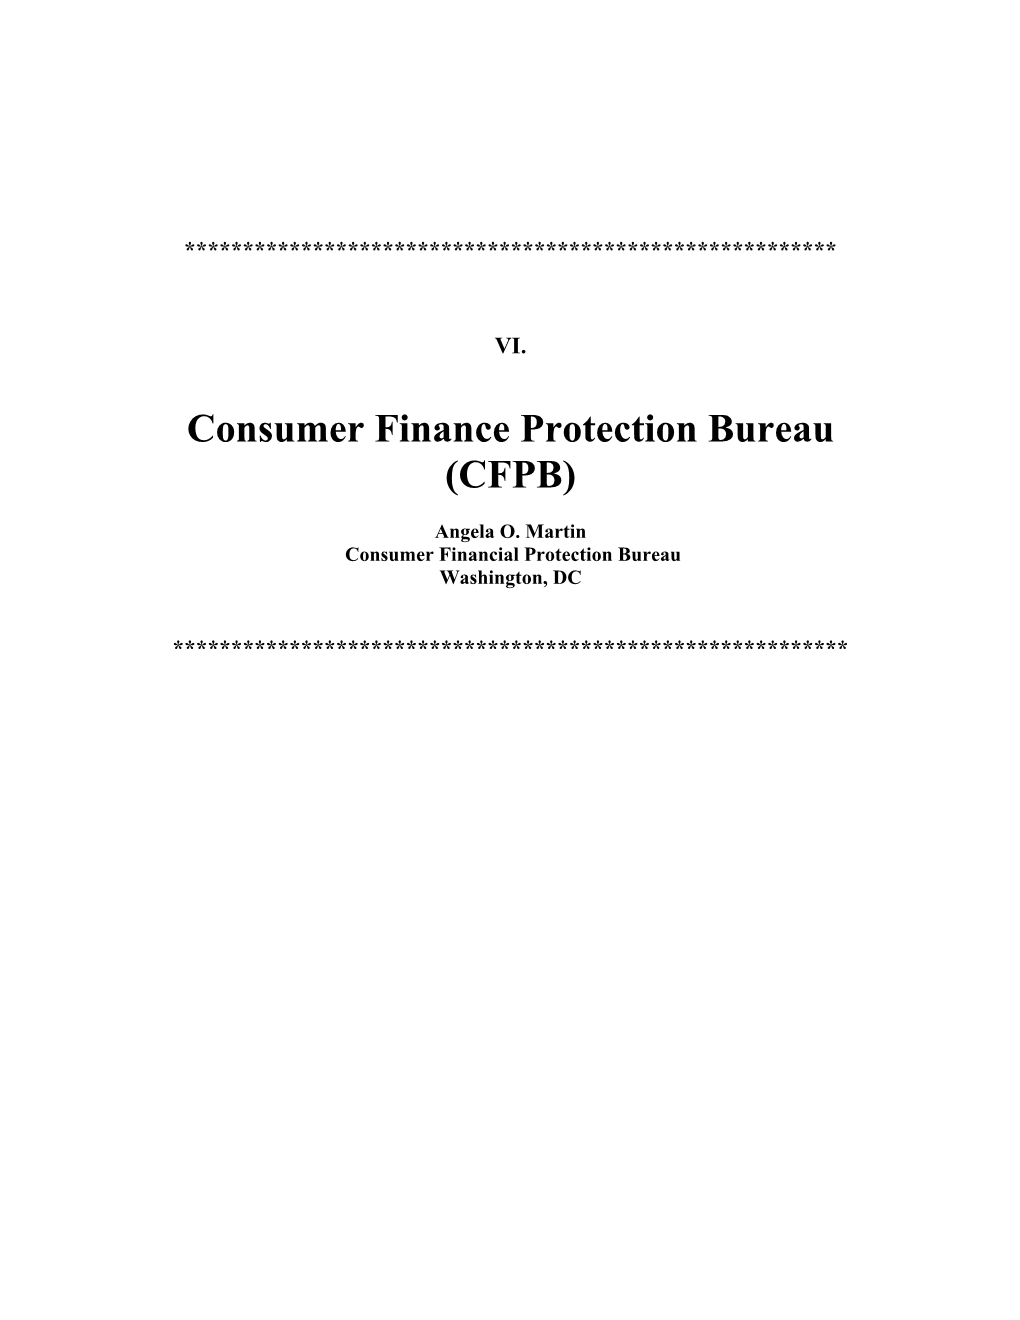 Consumer Finance Protection Bureau (CFPB)